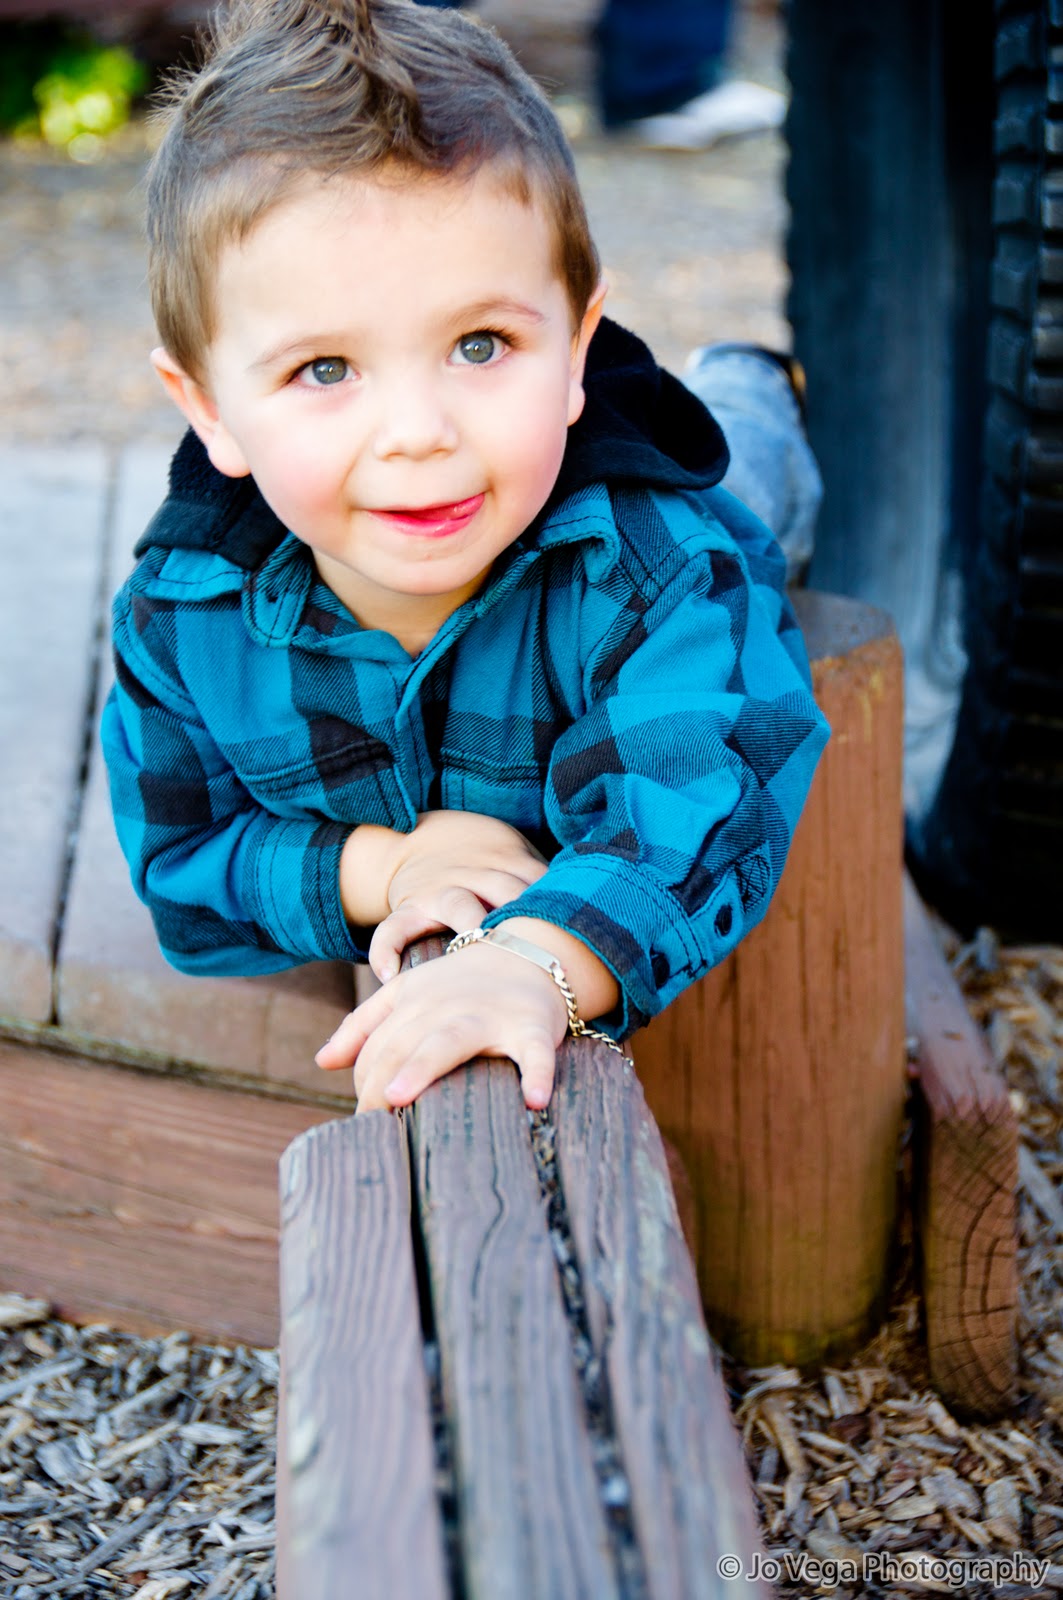 Jo Vega Photography: Toddler Photo Shoot